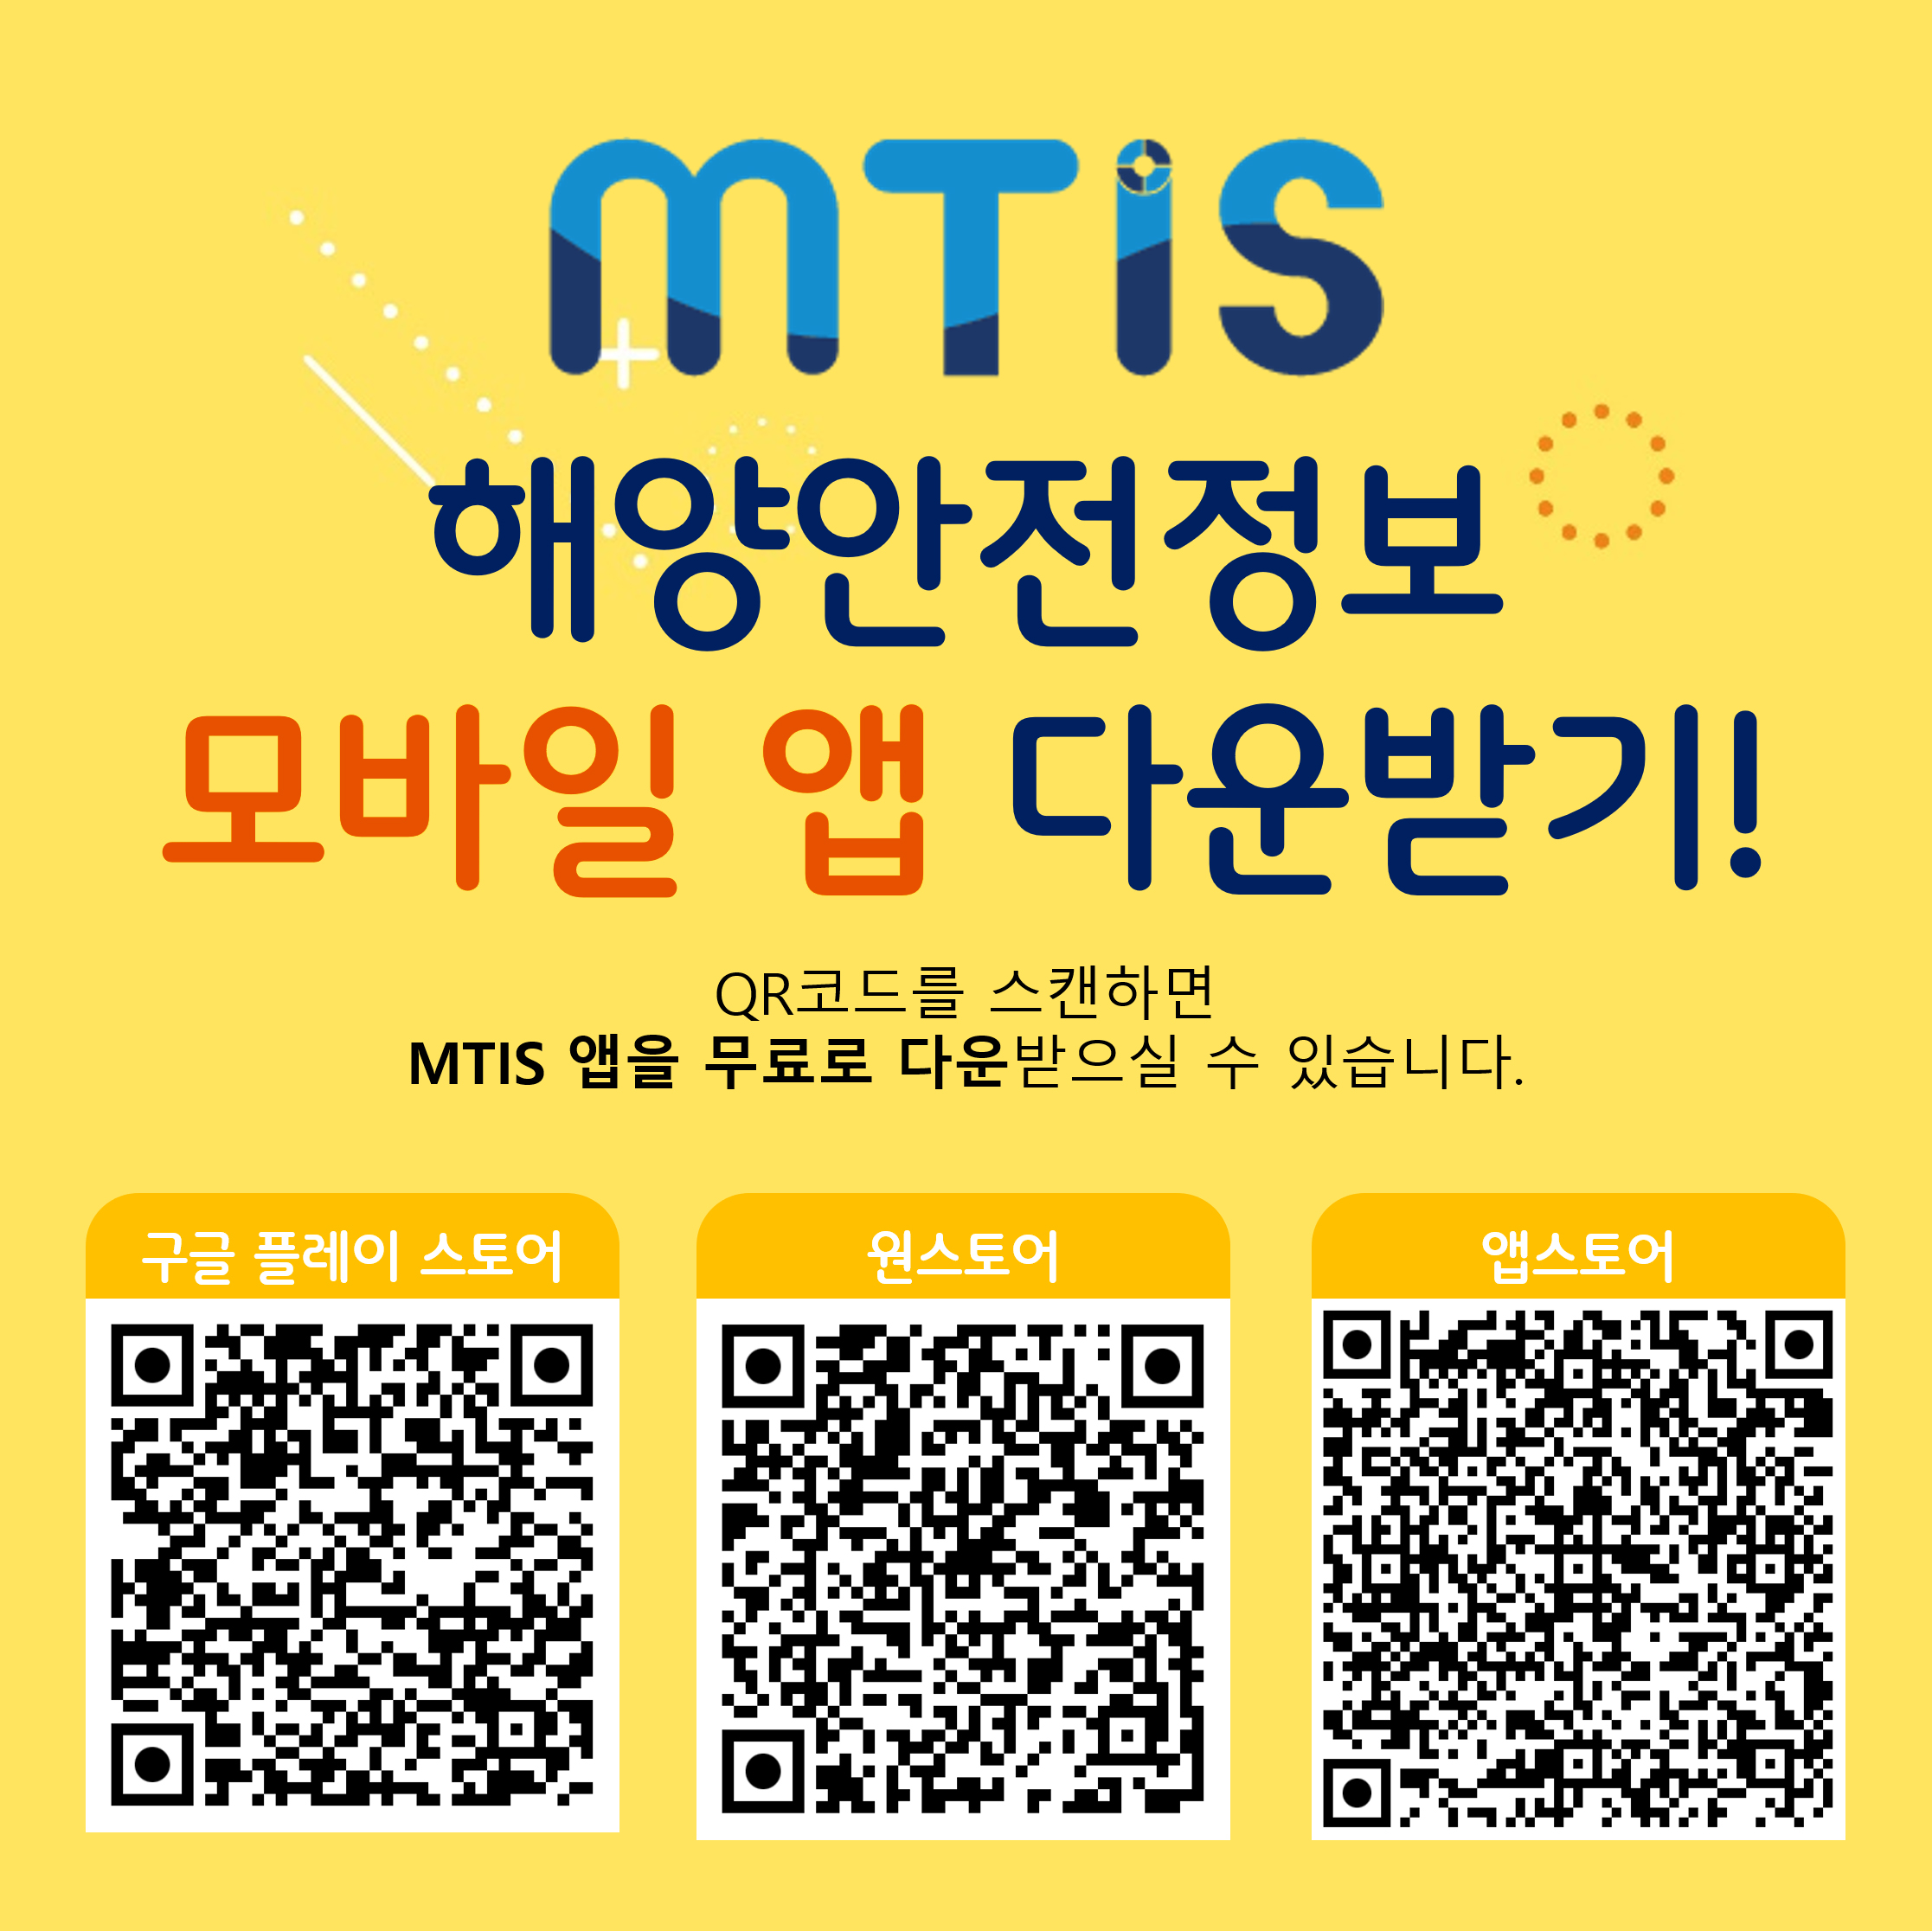 MTIS 해양안전정보 모바일 앱 다운받기!
QR코드를 스캔하면 MTIS 앱을 무료로 다운 받으실수 있습니다.
구글 플레이 스토어 : https://play.google.com/store/apps/details;jsessionid=020922A3E72C53C35114C2B376401F1D?id=kr.or.komsa.mtis
원스토어 : https://m.onestore.co.kr/mobilepoc/apps/appsDetail.omp?prodId=0000771271
앱스토어 : https://apps.apple.com/kr/app/%ED%95%B4%EC%96%91%EA%B5%90%ED%86%B5%EC%95%88%EC%A0%84%EC%A0%95%EB%B3%B4/id6462842483